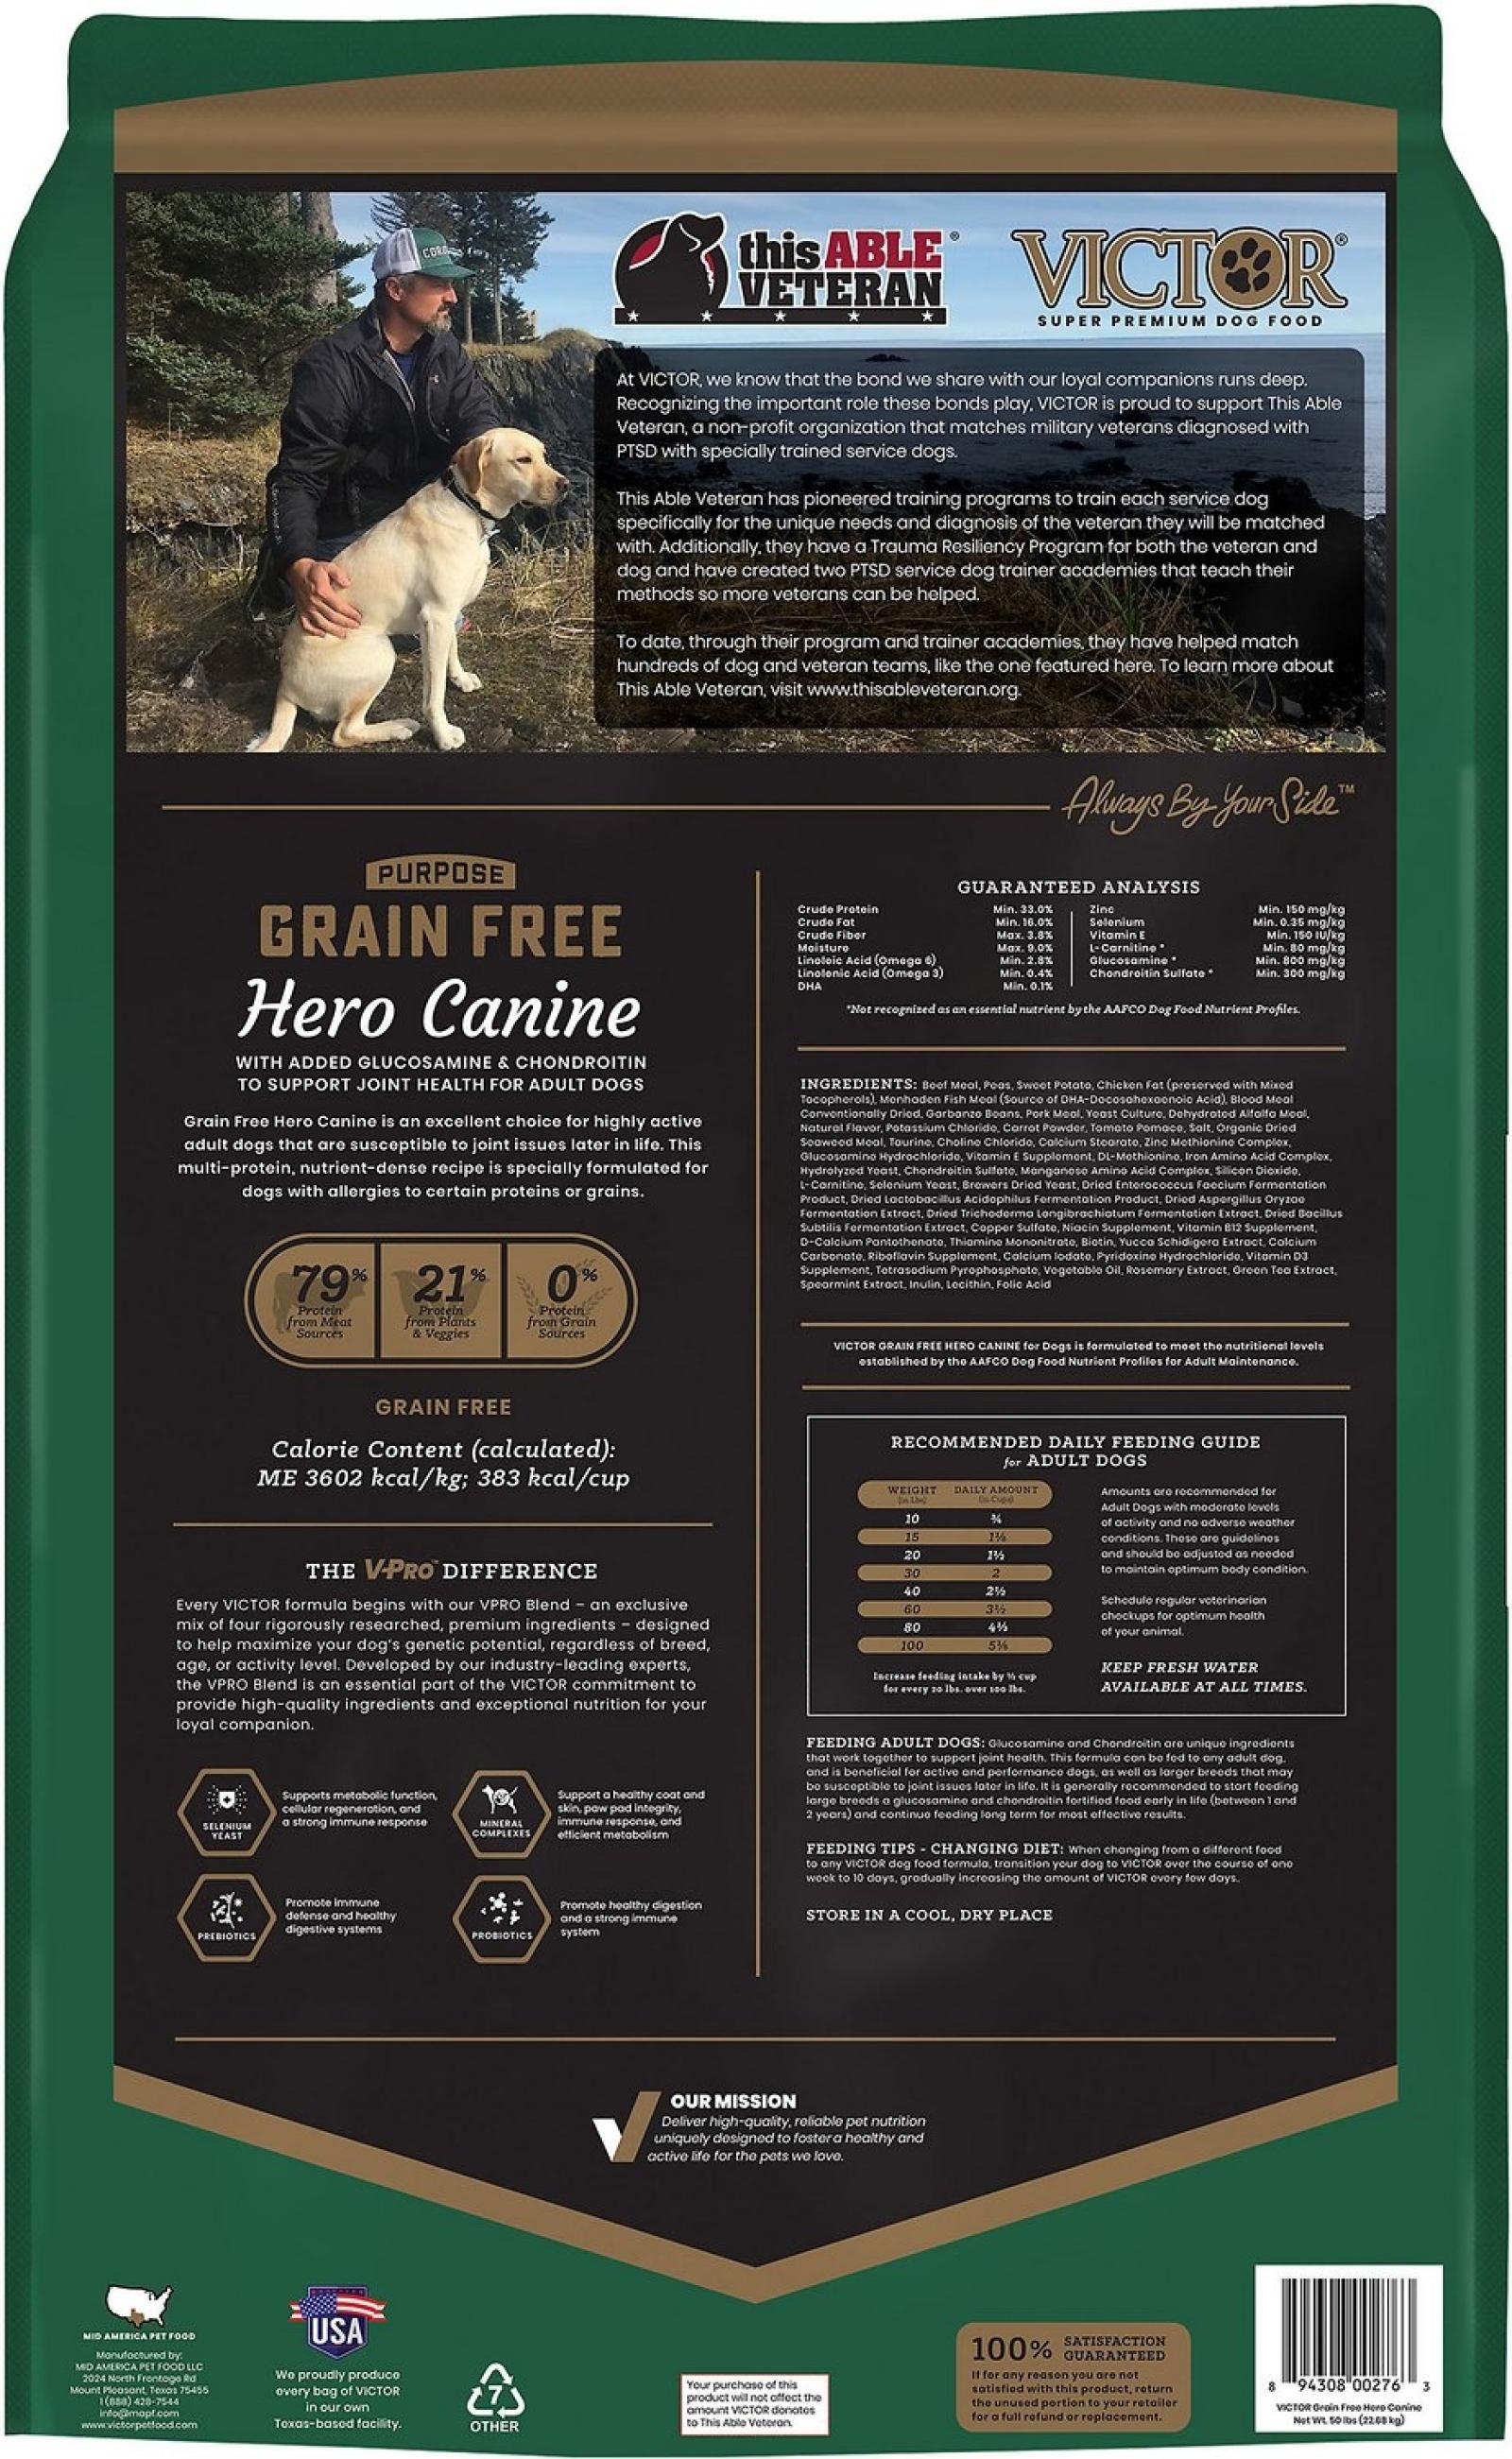 Victor Purpose Grain-Free Hero Canine